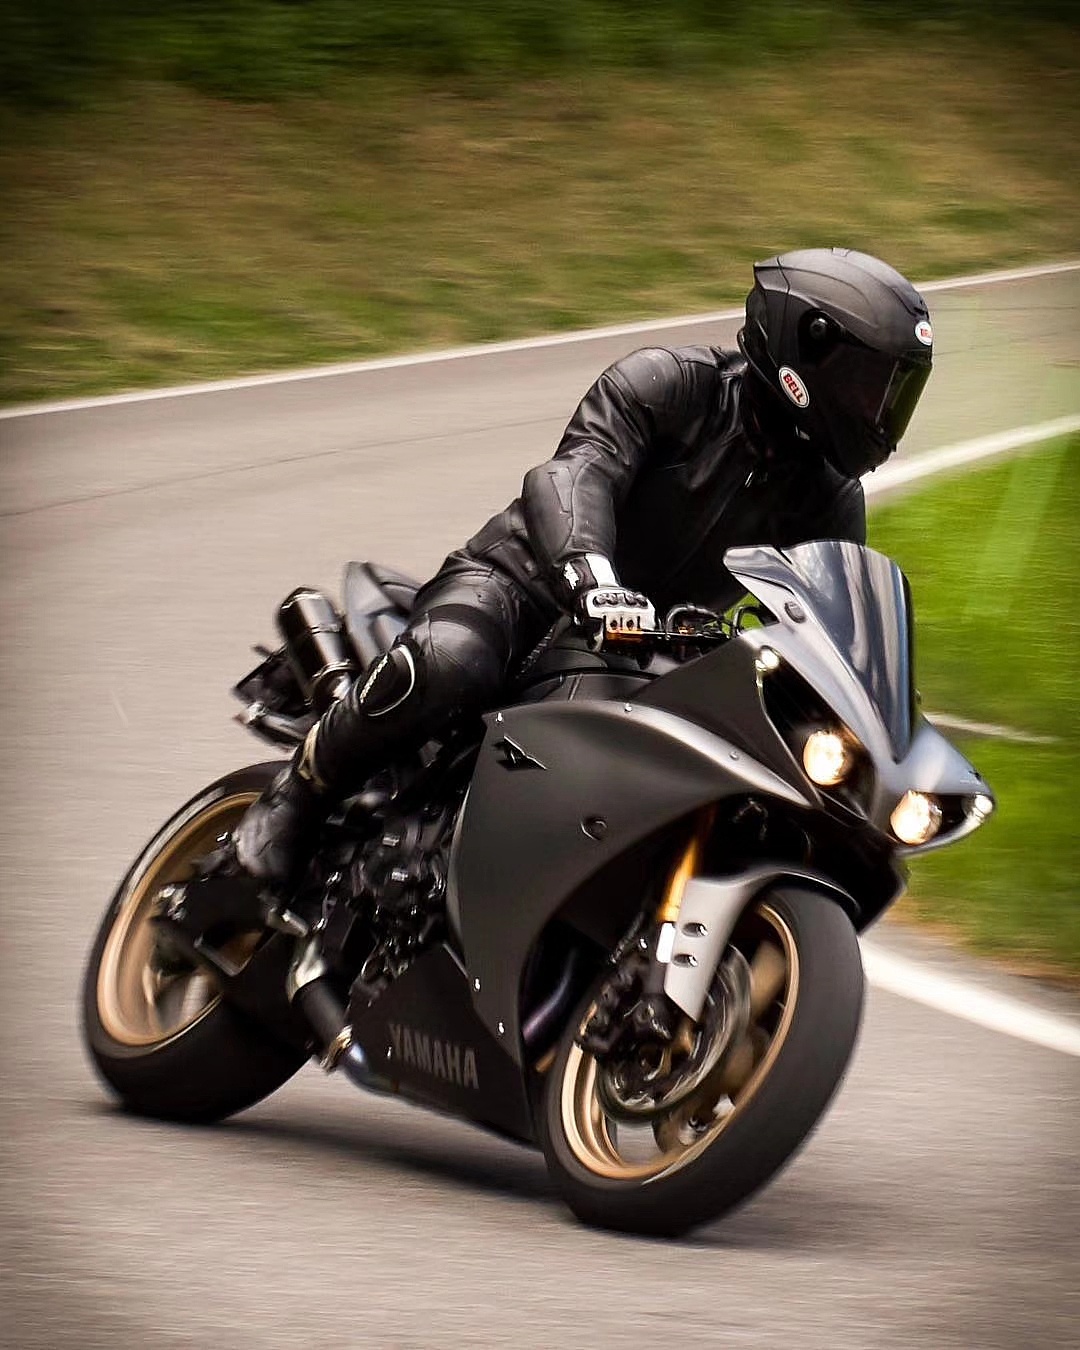 Moto-Terminator - The Fully-Rideable Ducati Hypermotard-Based Terminator Salvation Stunt Bike